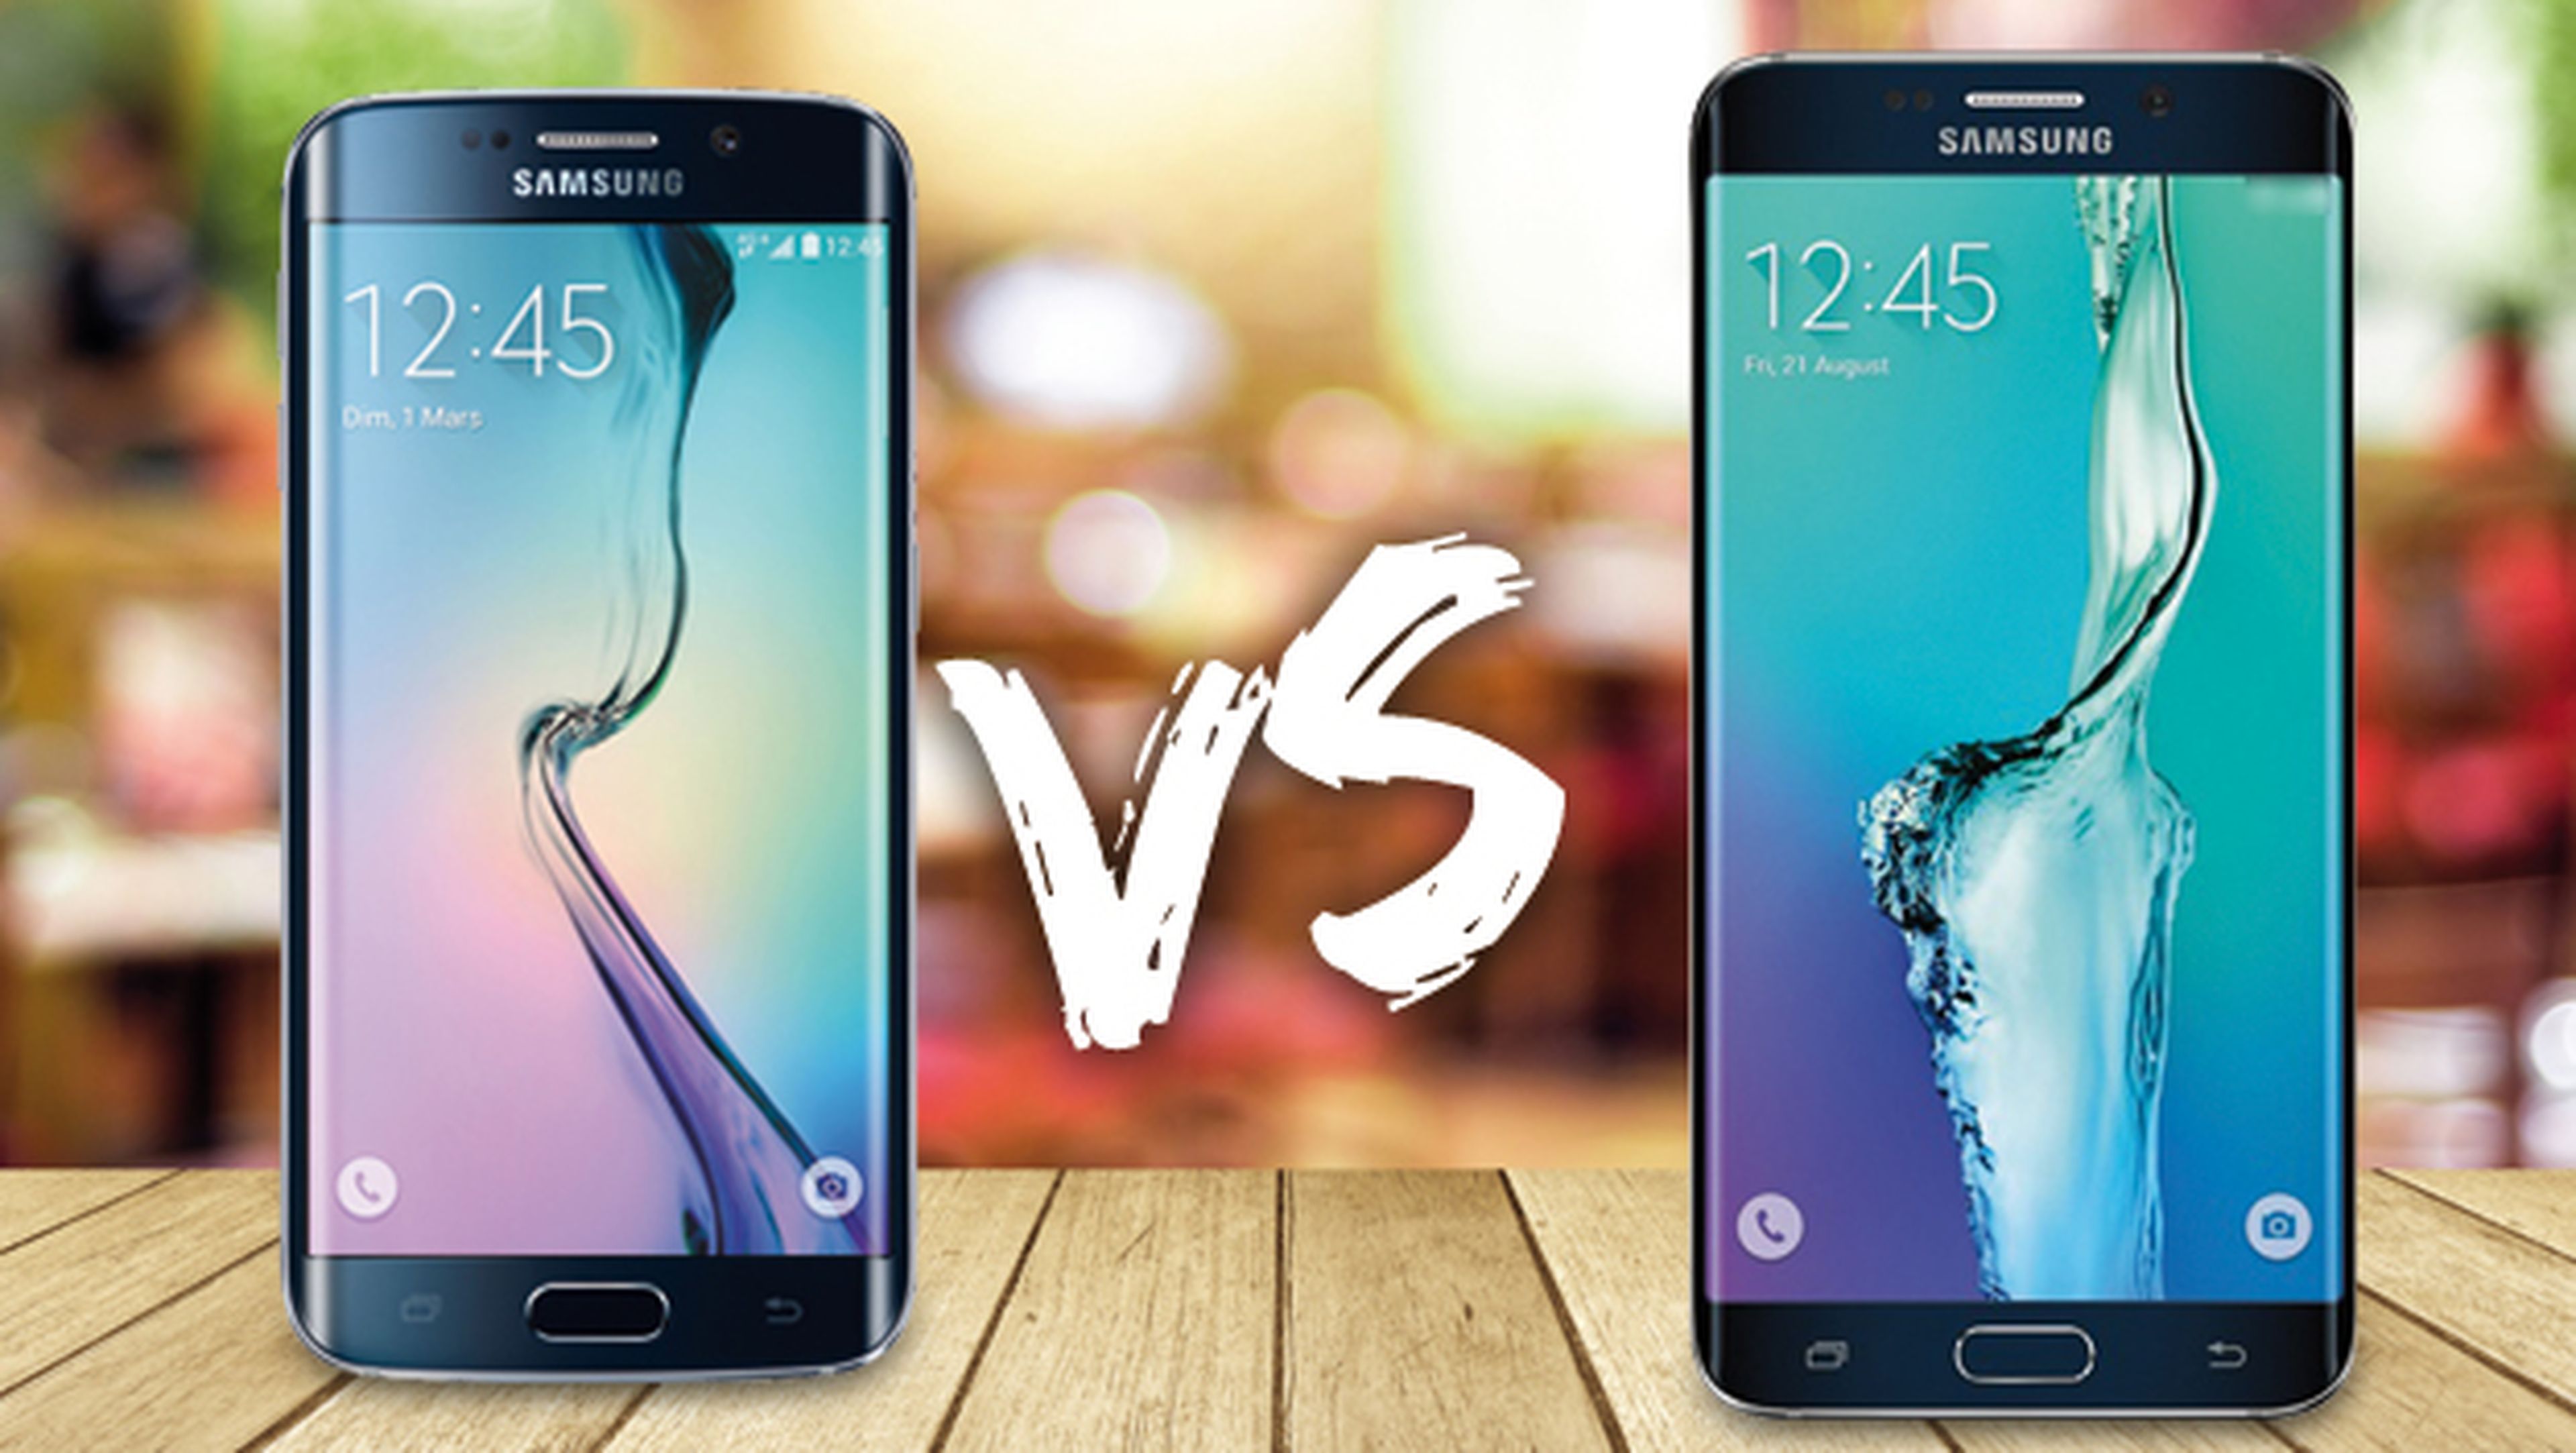 Samsung Galaxy S6 Ege+ o Galaxy S6 Edge ¿Cuáles son las mejoras?